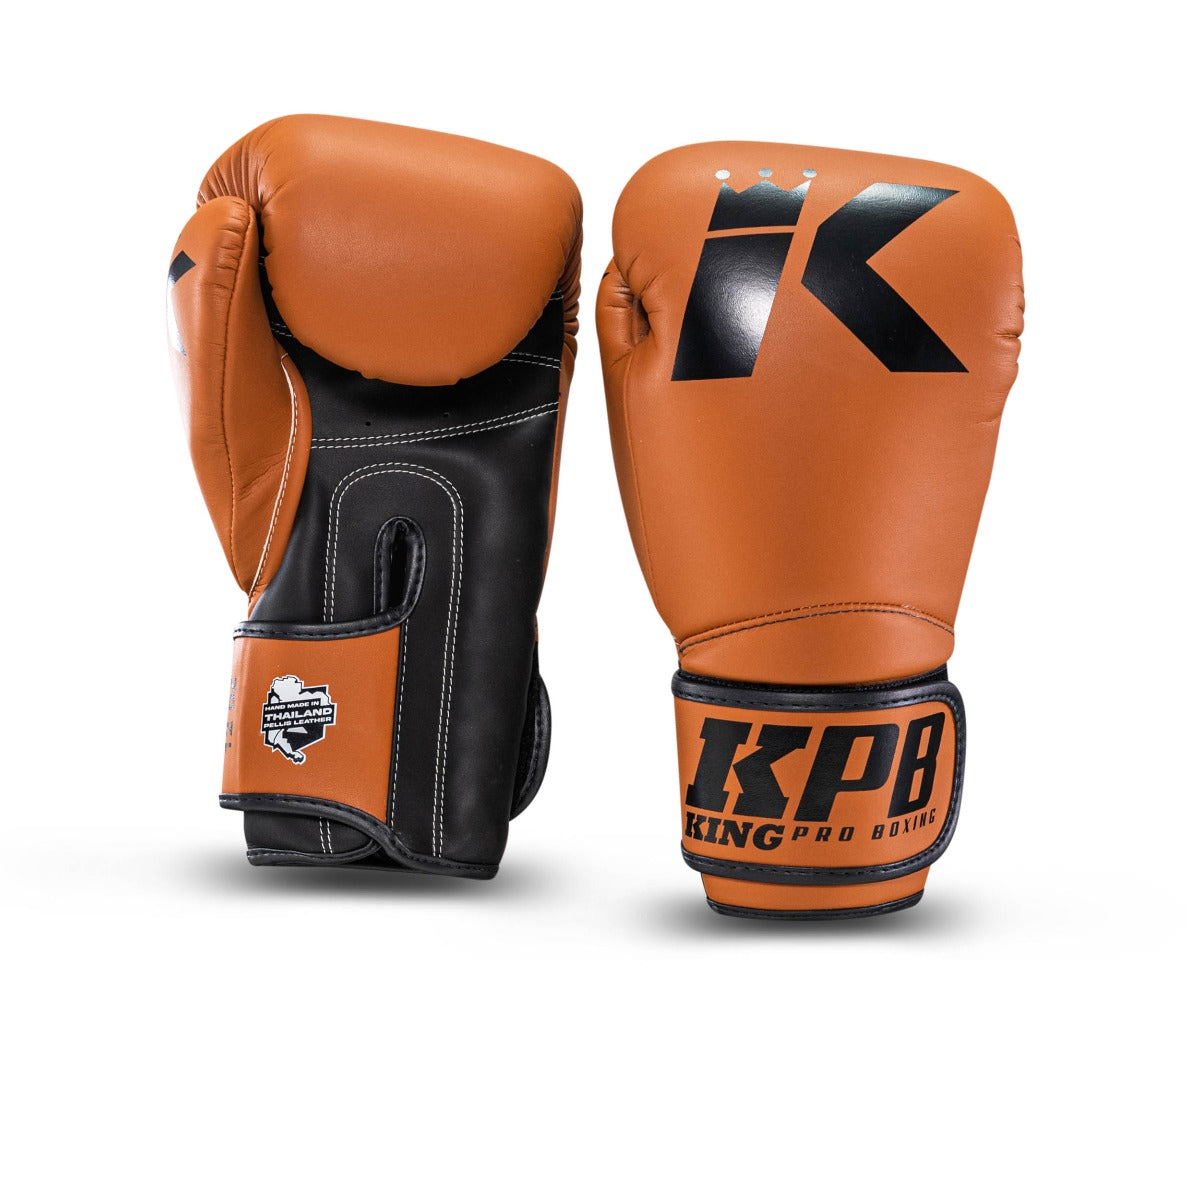 King PRO boxing boxing gloves - BGK 3